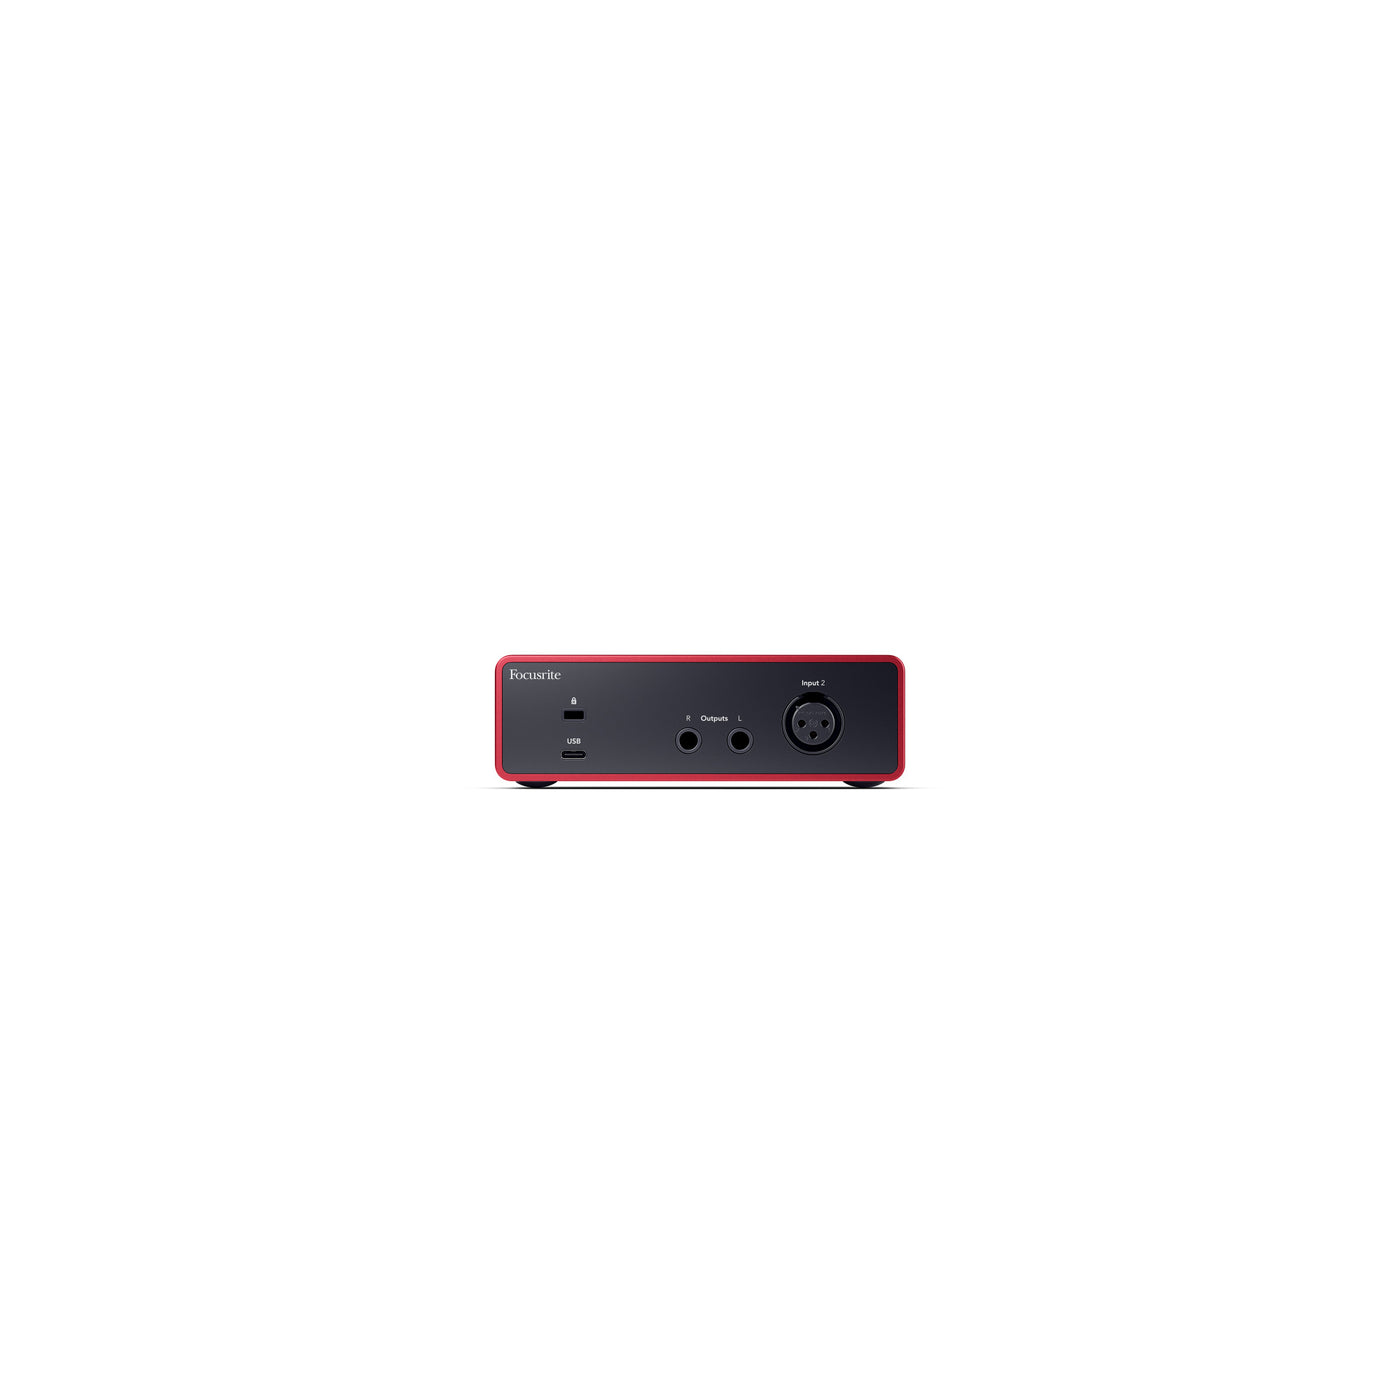 Focusrite Scarlett Solo (4th Gen) USB Audio Interface, Professional Quality Audio Equipment for Studio Musicians, Guitarists, & Producers